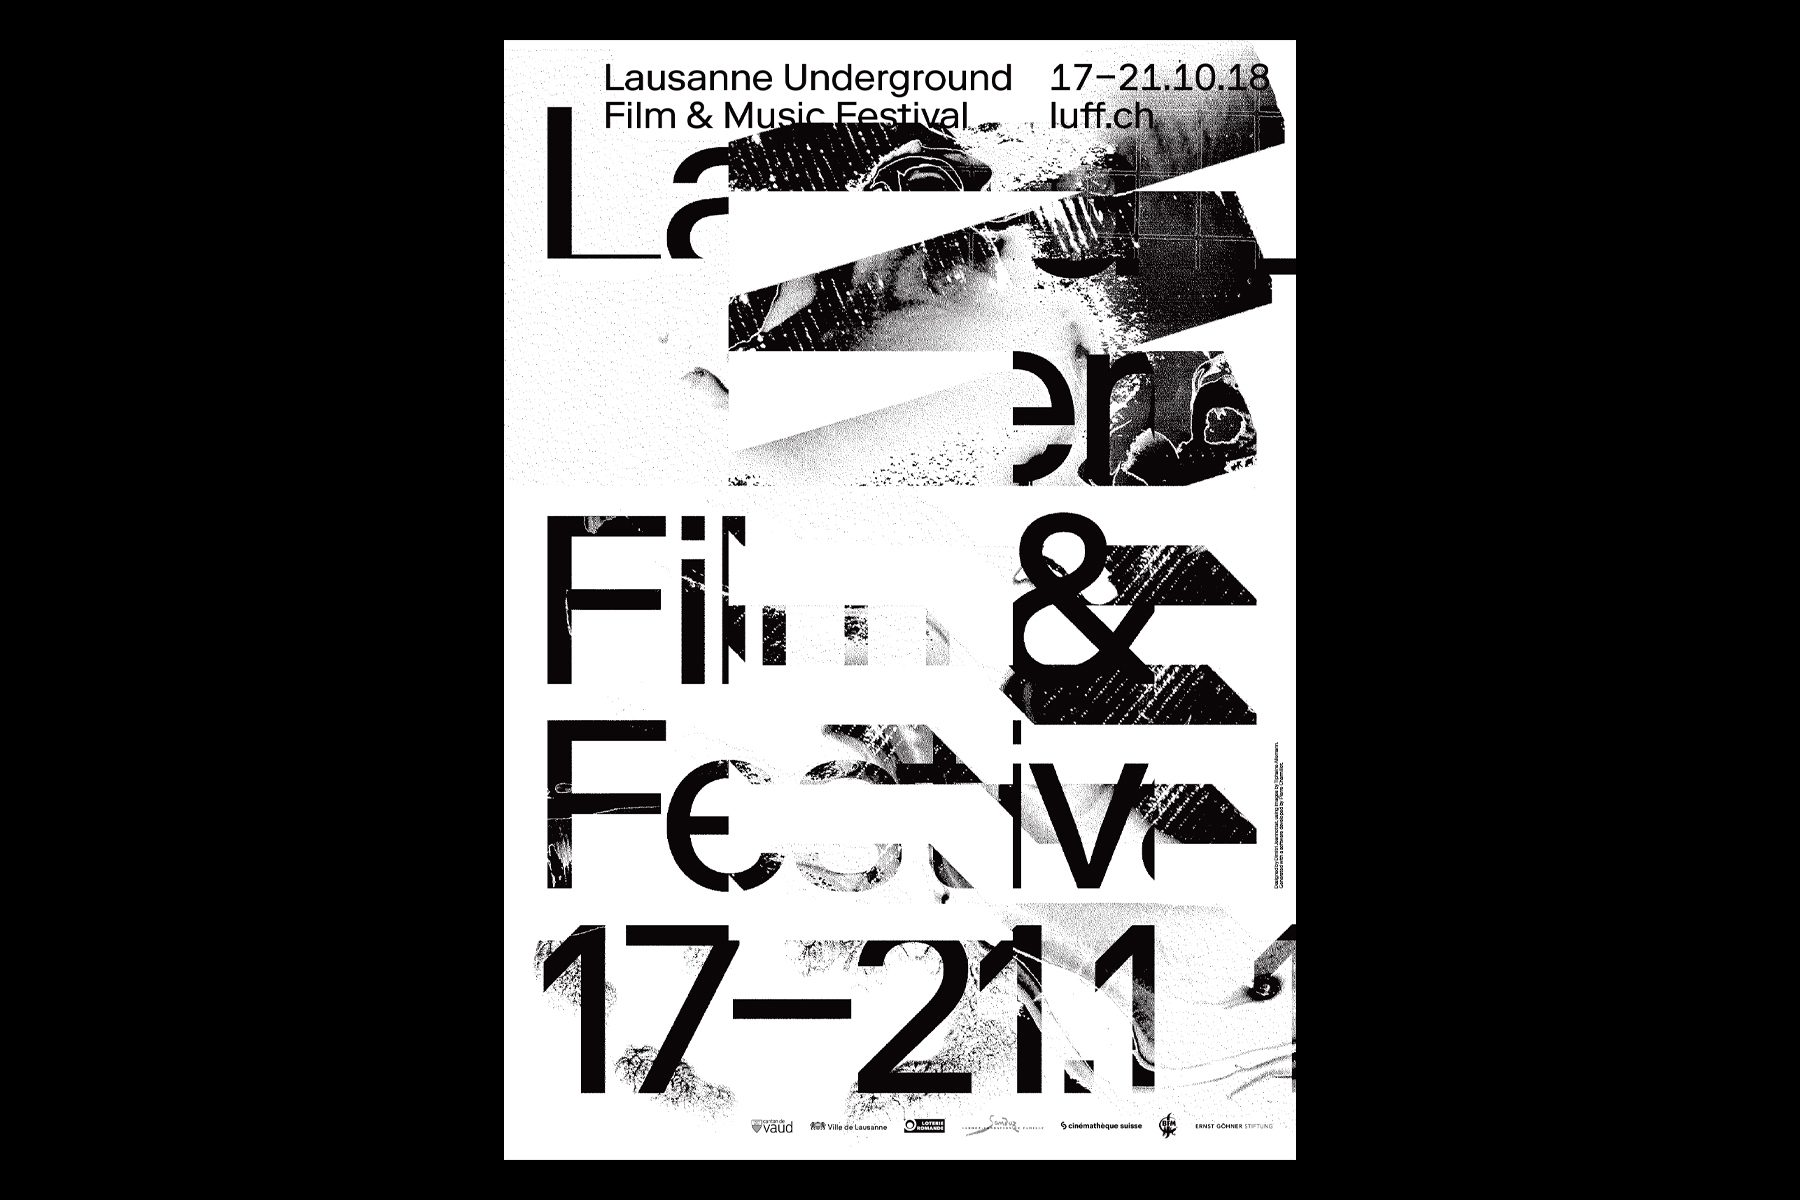 LUFF_Lausanne-Underground-Film-and-Music-Festival_2018_Dimitri-Jeannottat_1800x1200_39